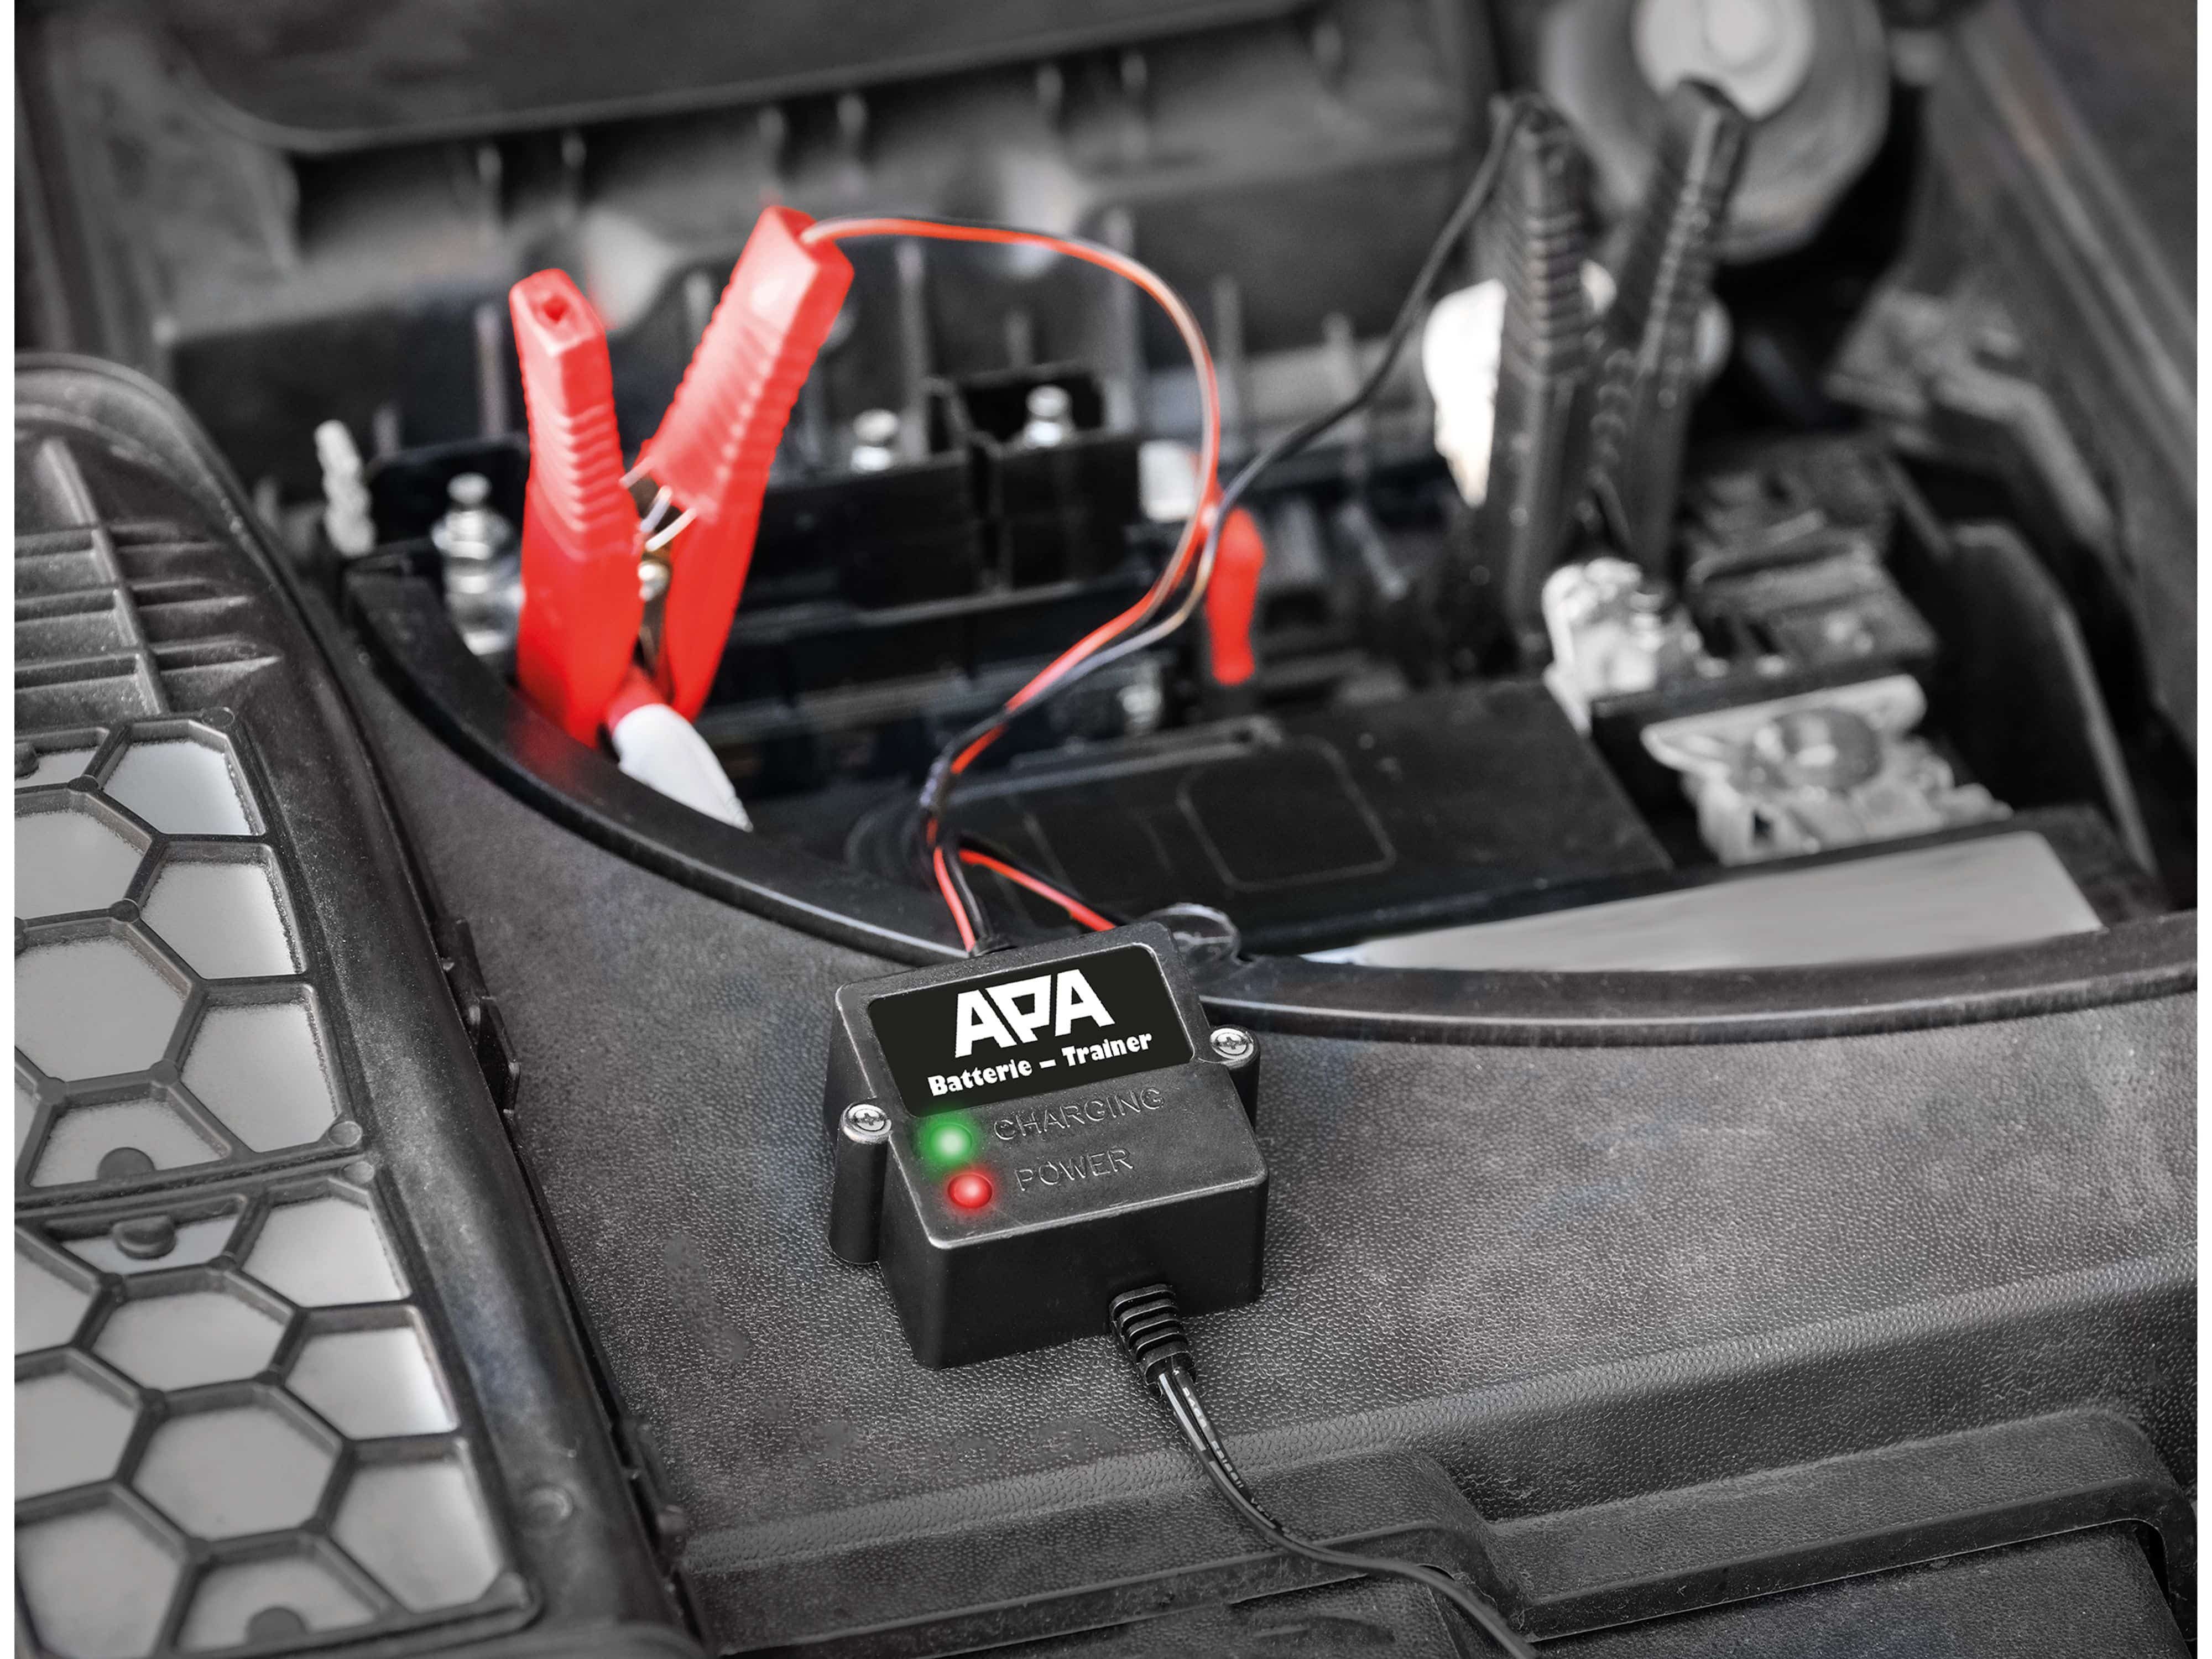 Batterie 500mA APA Batterietrainer 16506, 12V, APA